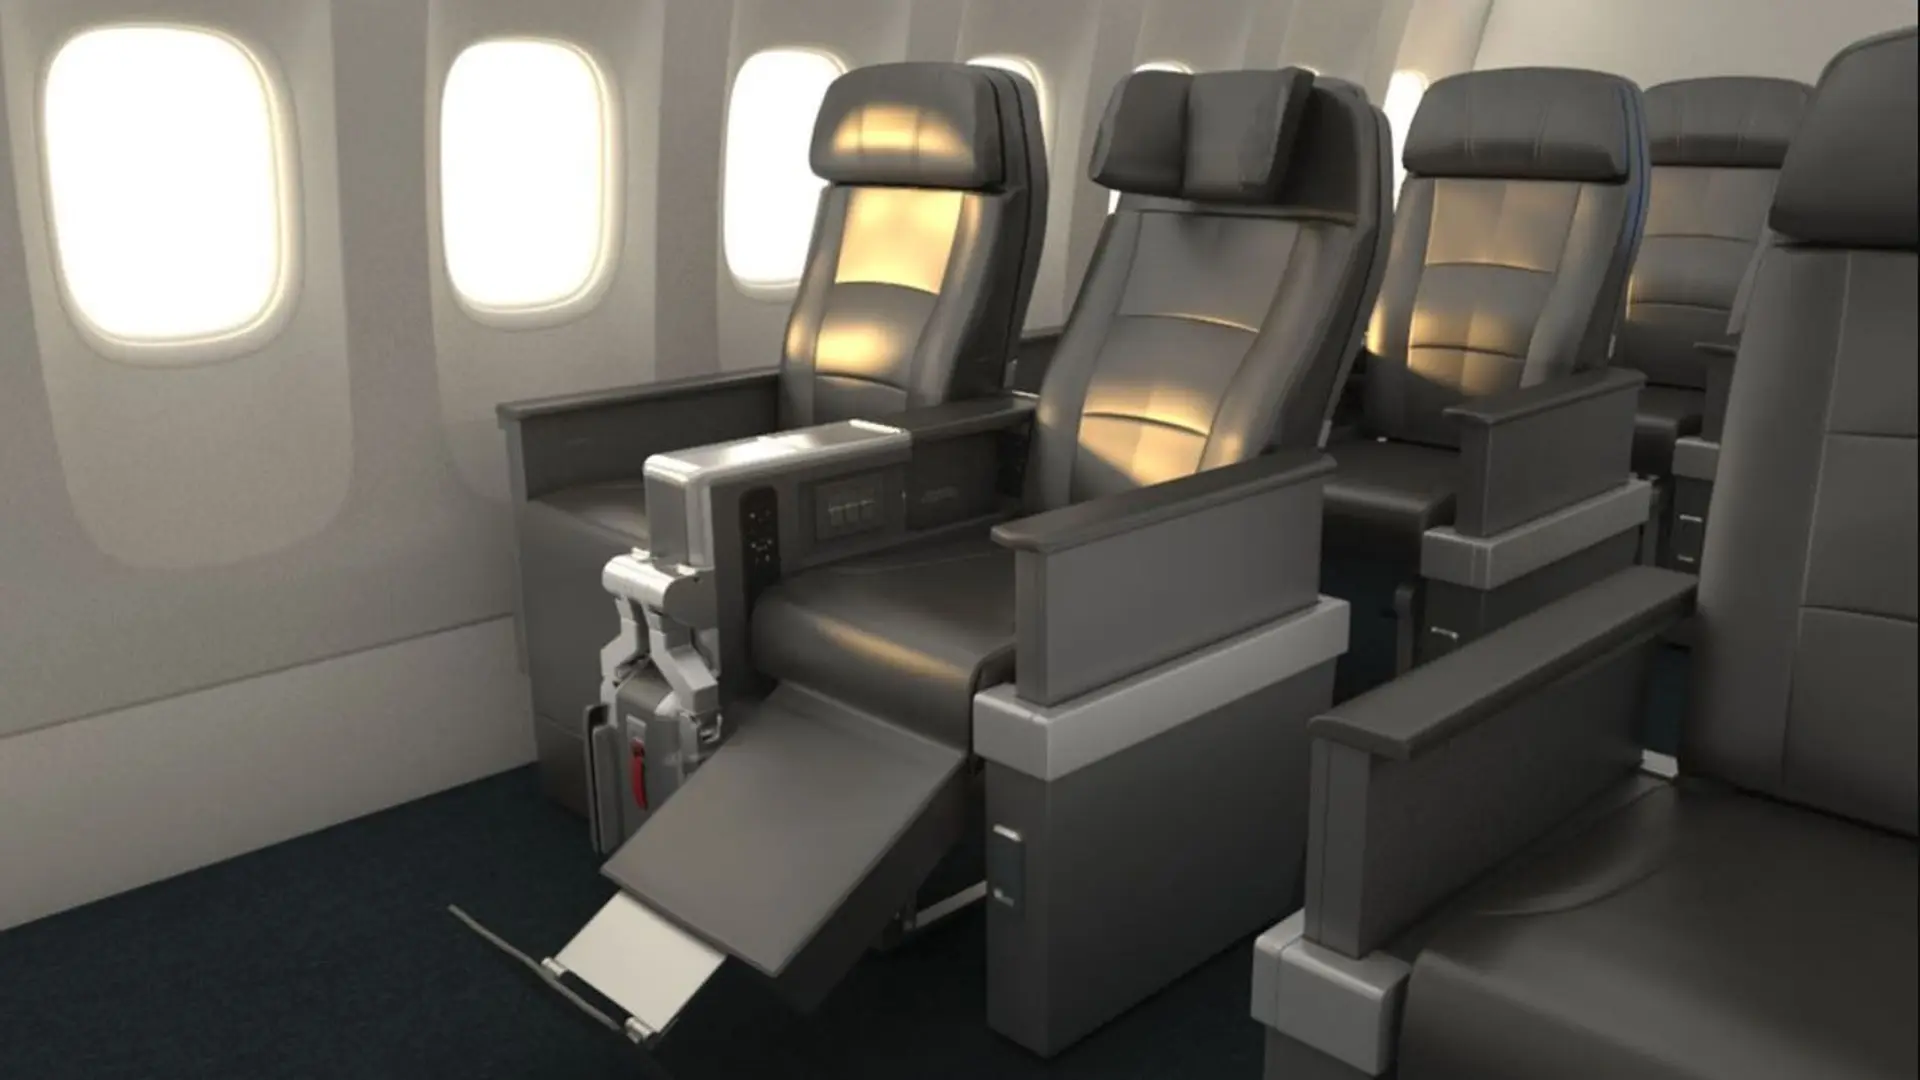 American Airlines Premium Economy Seats